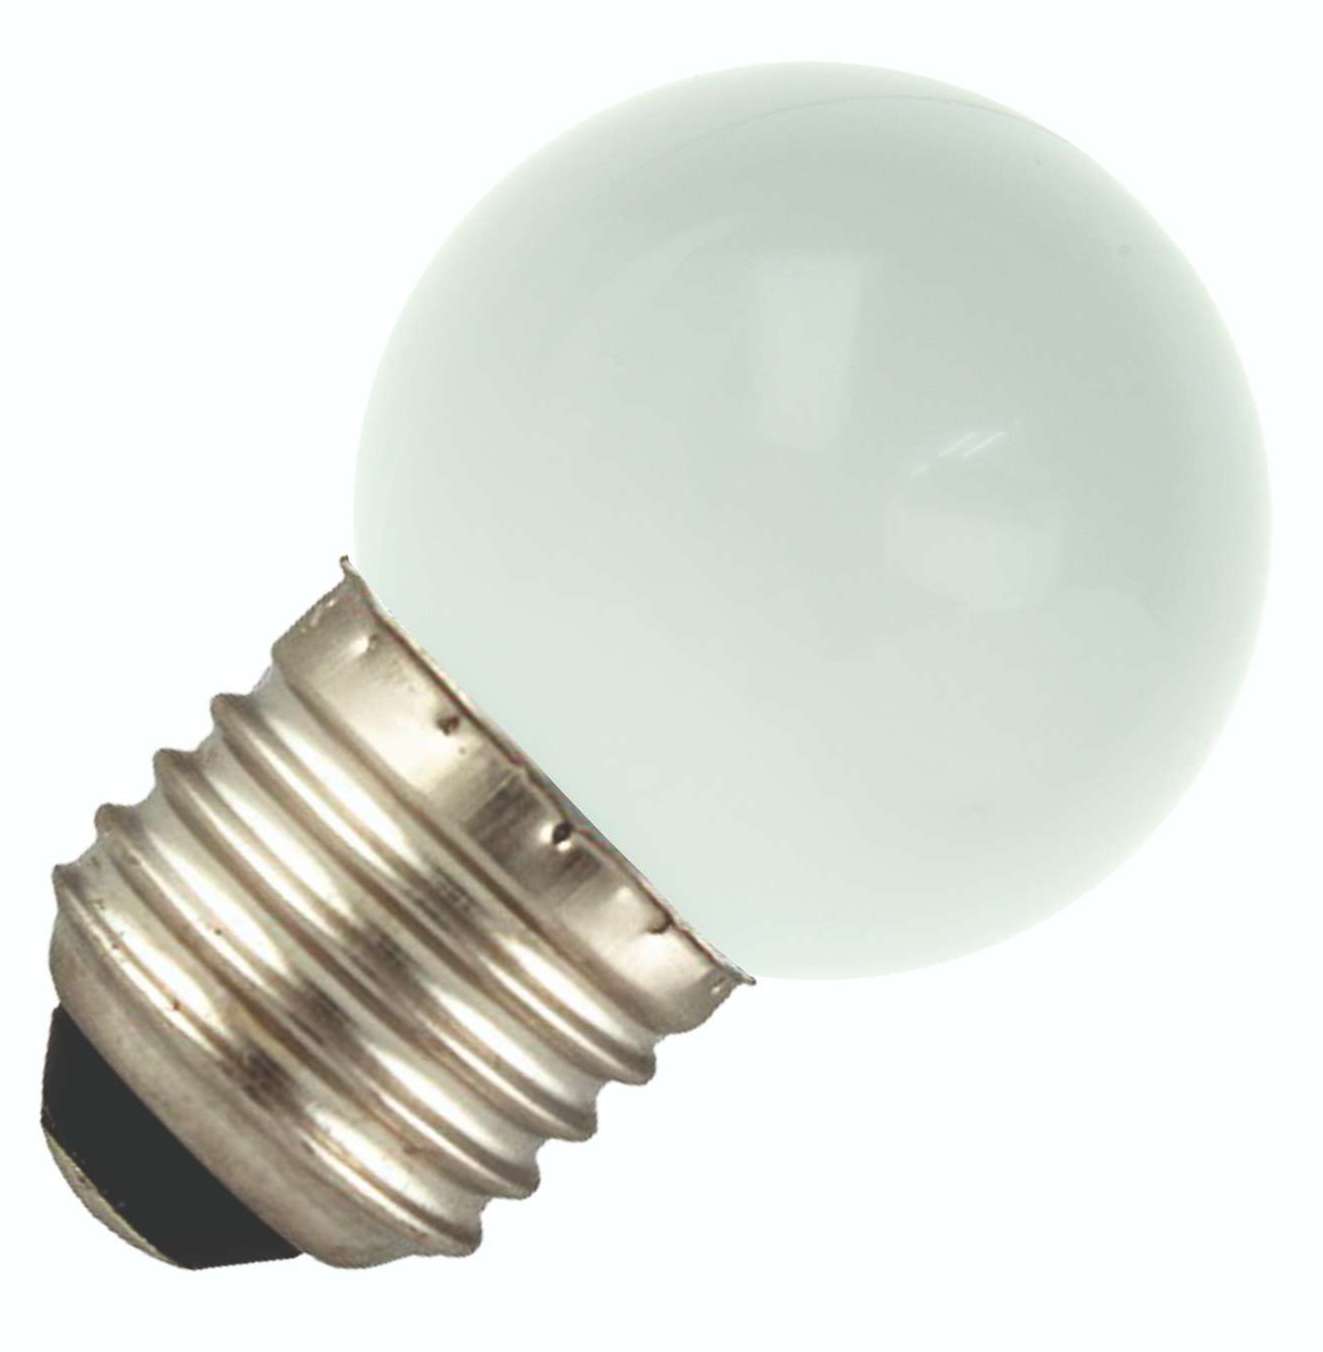 Bailey | LED Kogellamp | Grote fitting E27  | 1W